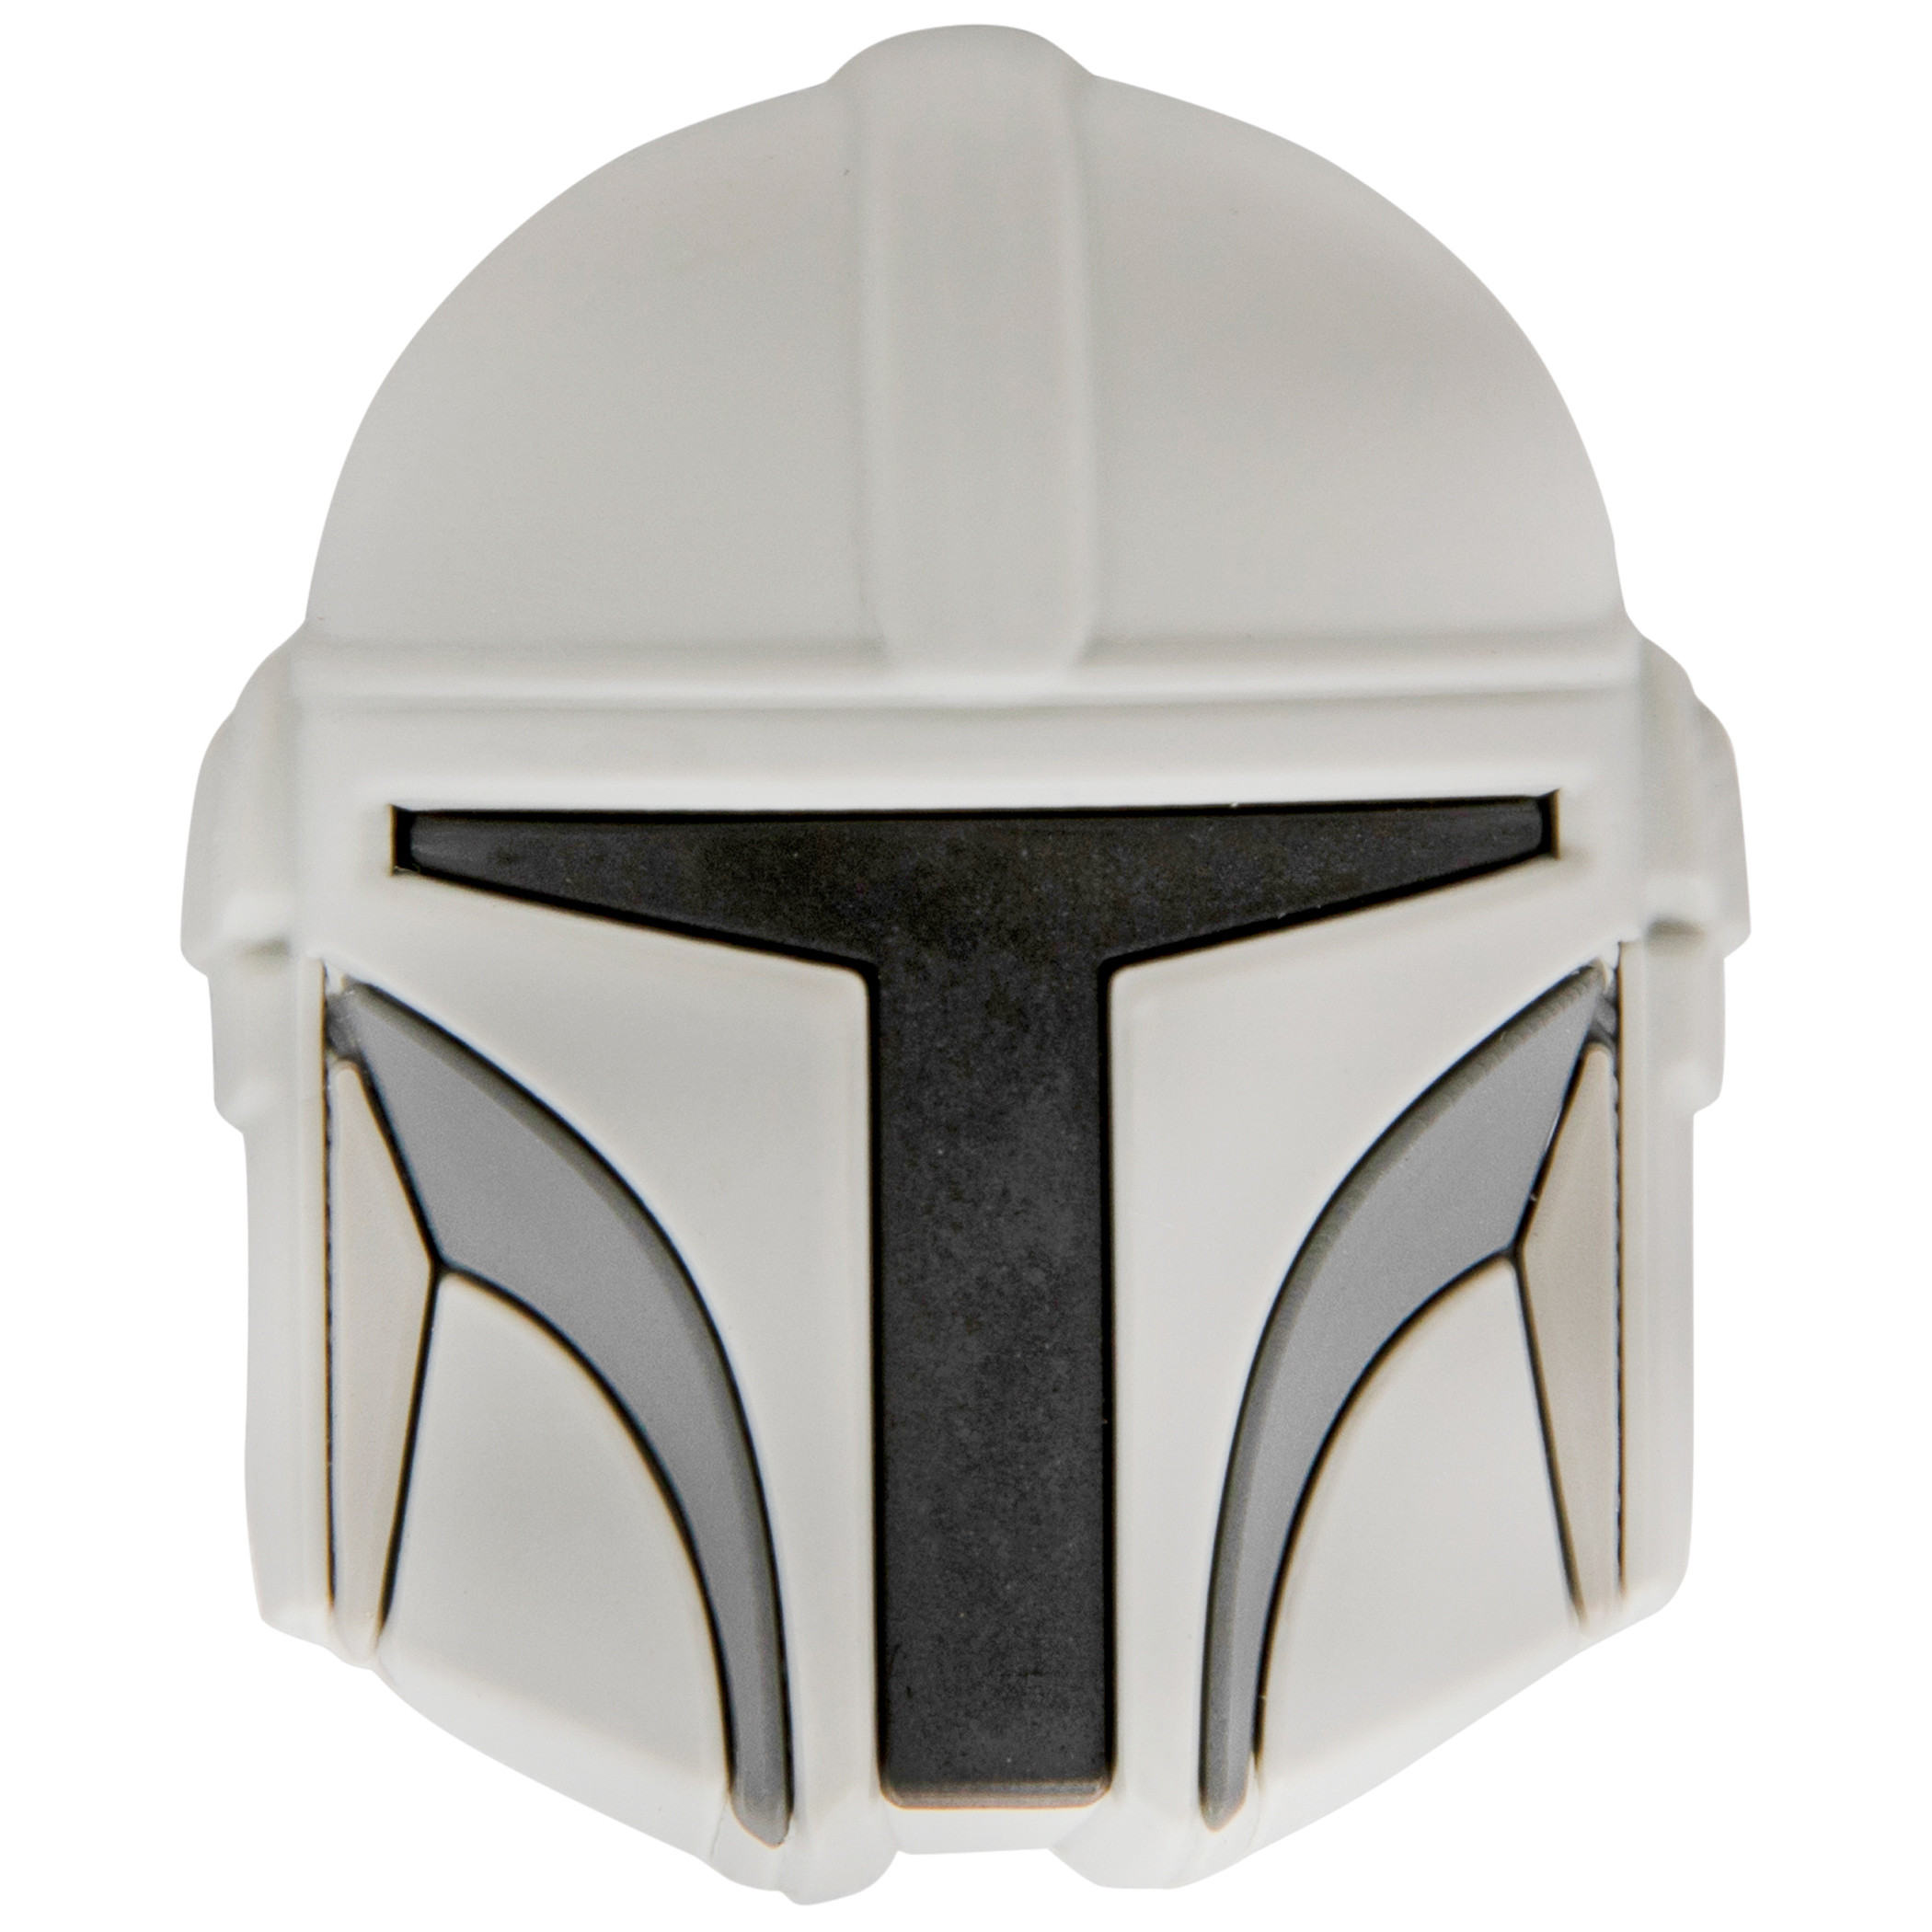 Star Wars The Mandalorian Helmet 3D Novelty Magnet